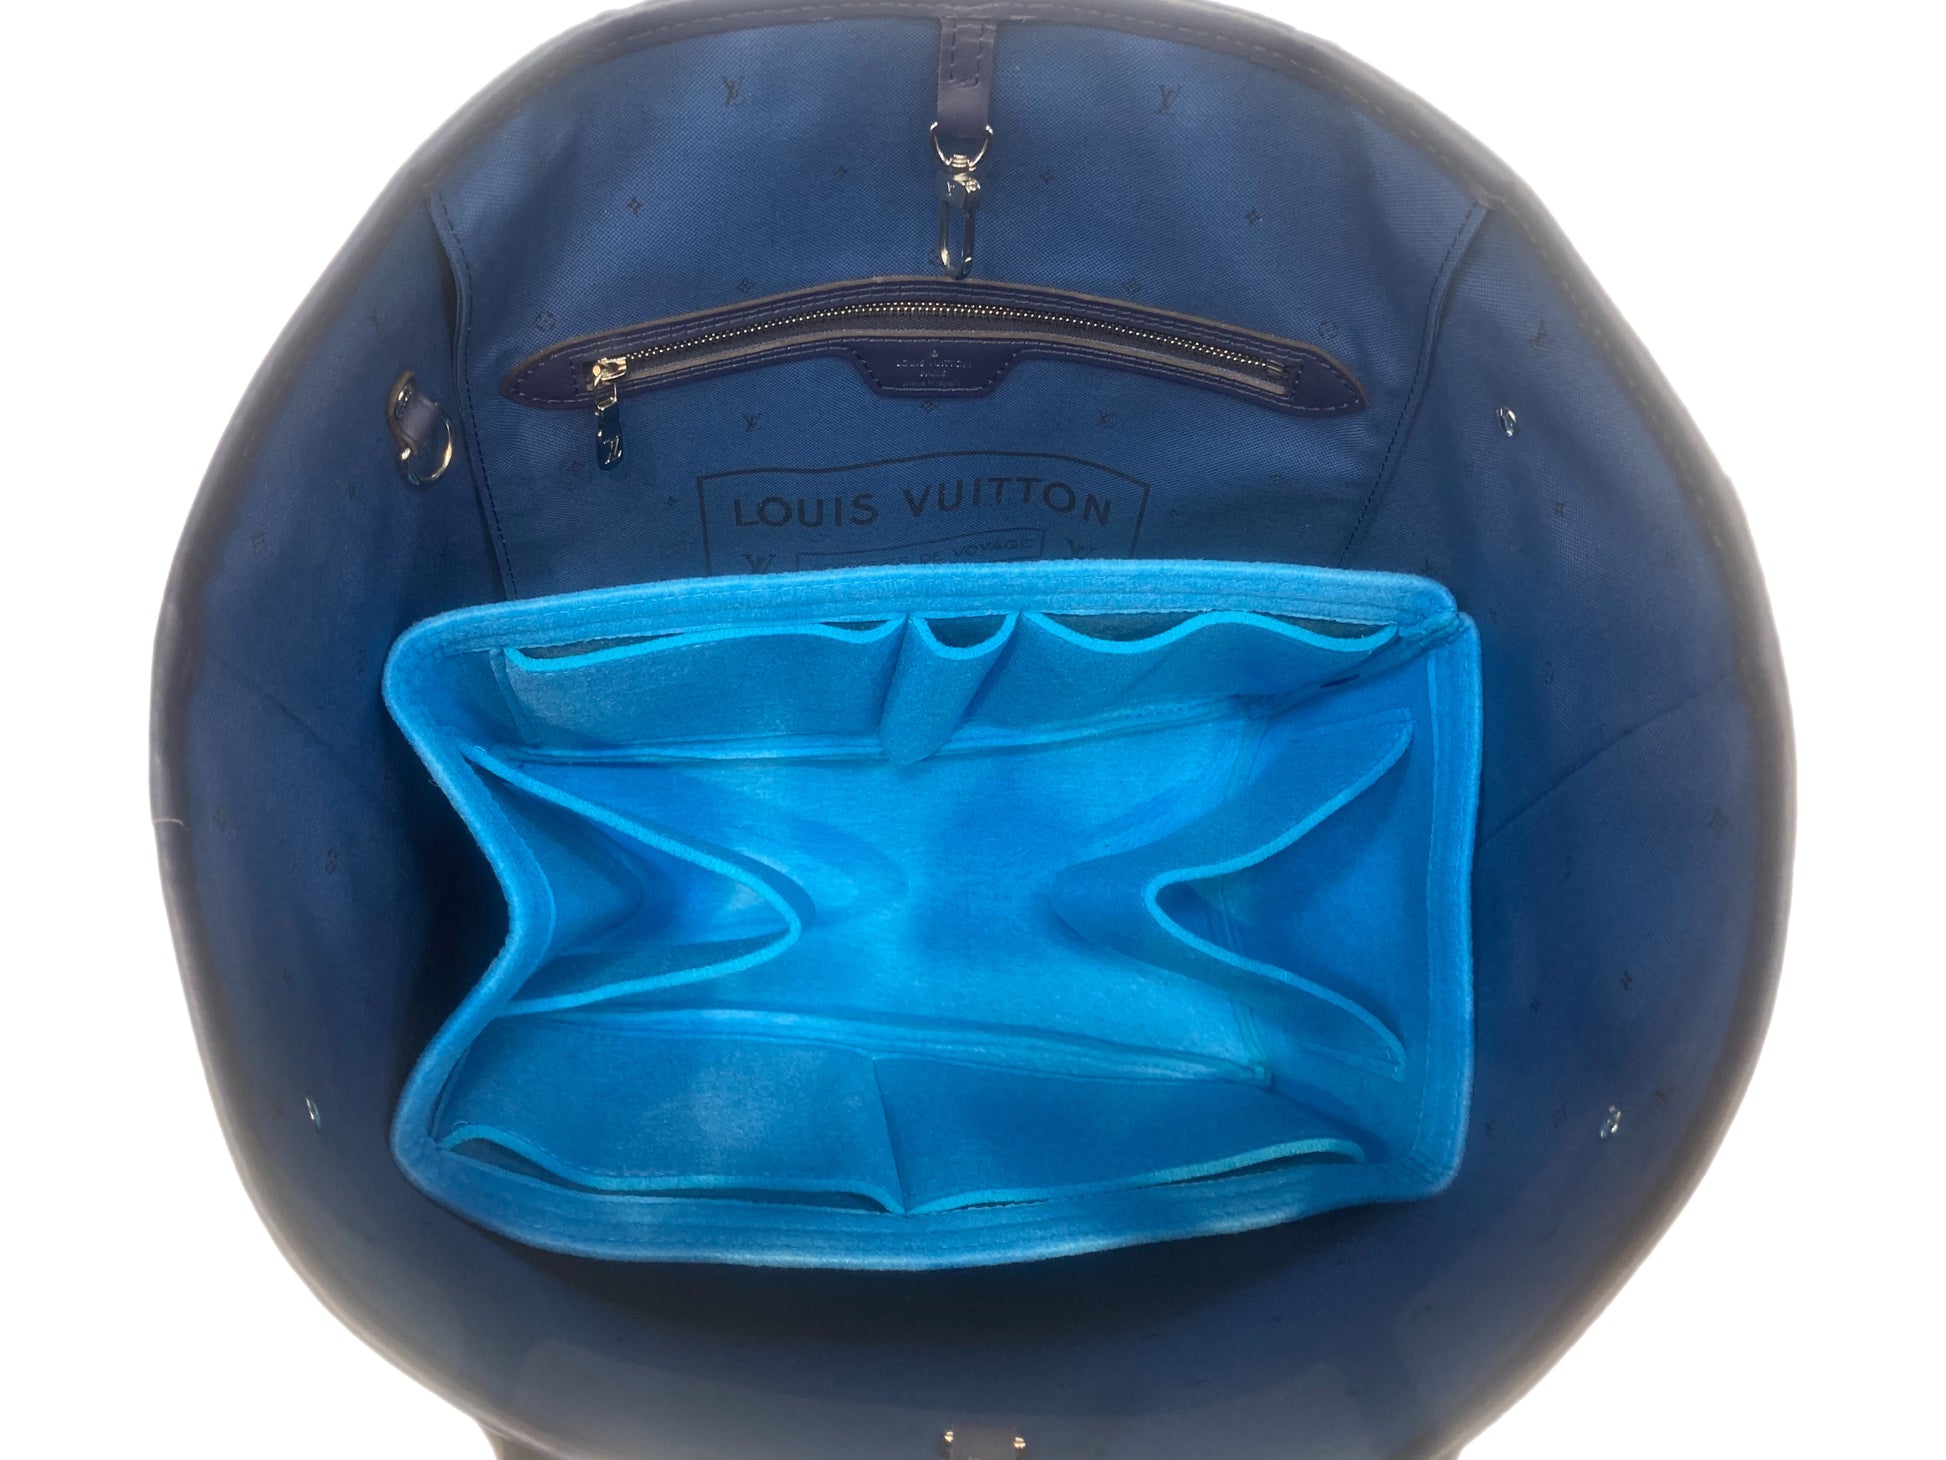 Louis Vuitton Blue Since 1854 Monogram Neverfull MM tote bag 323lvs223